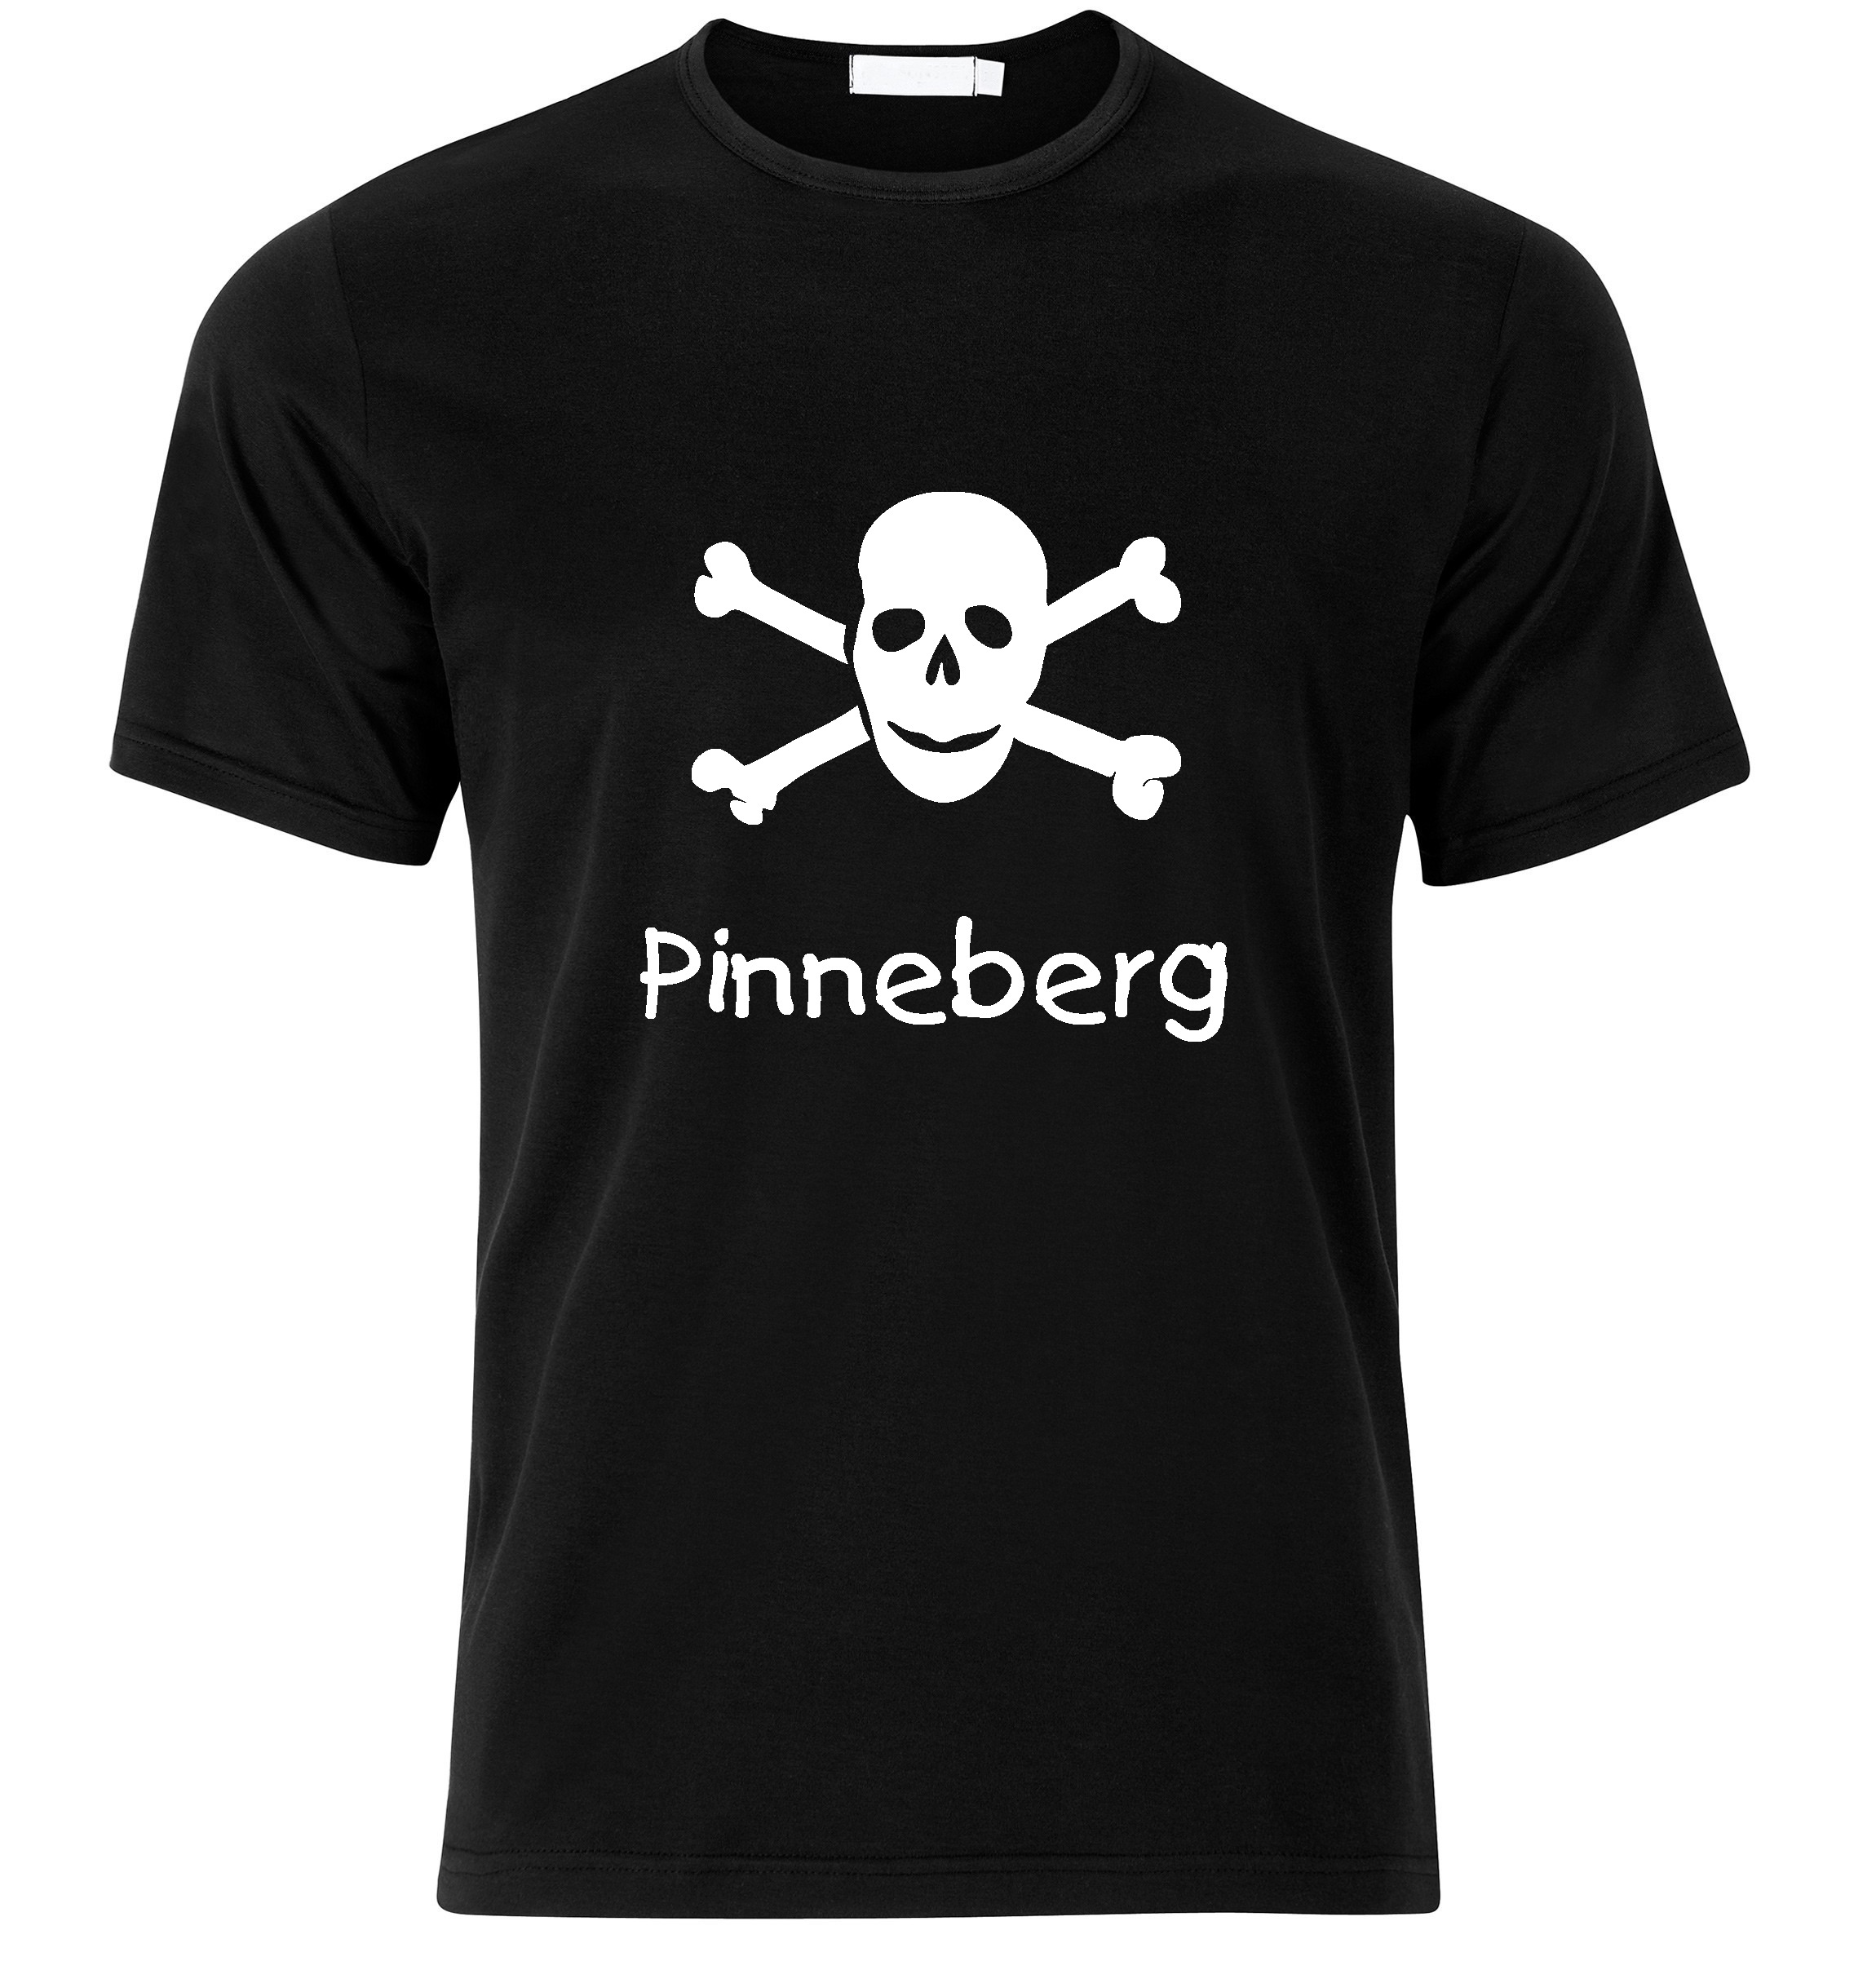 T-Shirt Pinneberg Jolly Roger, Totenkopf